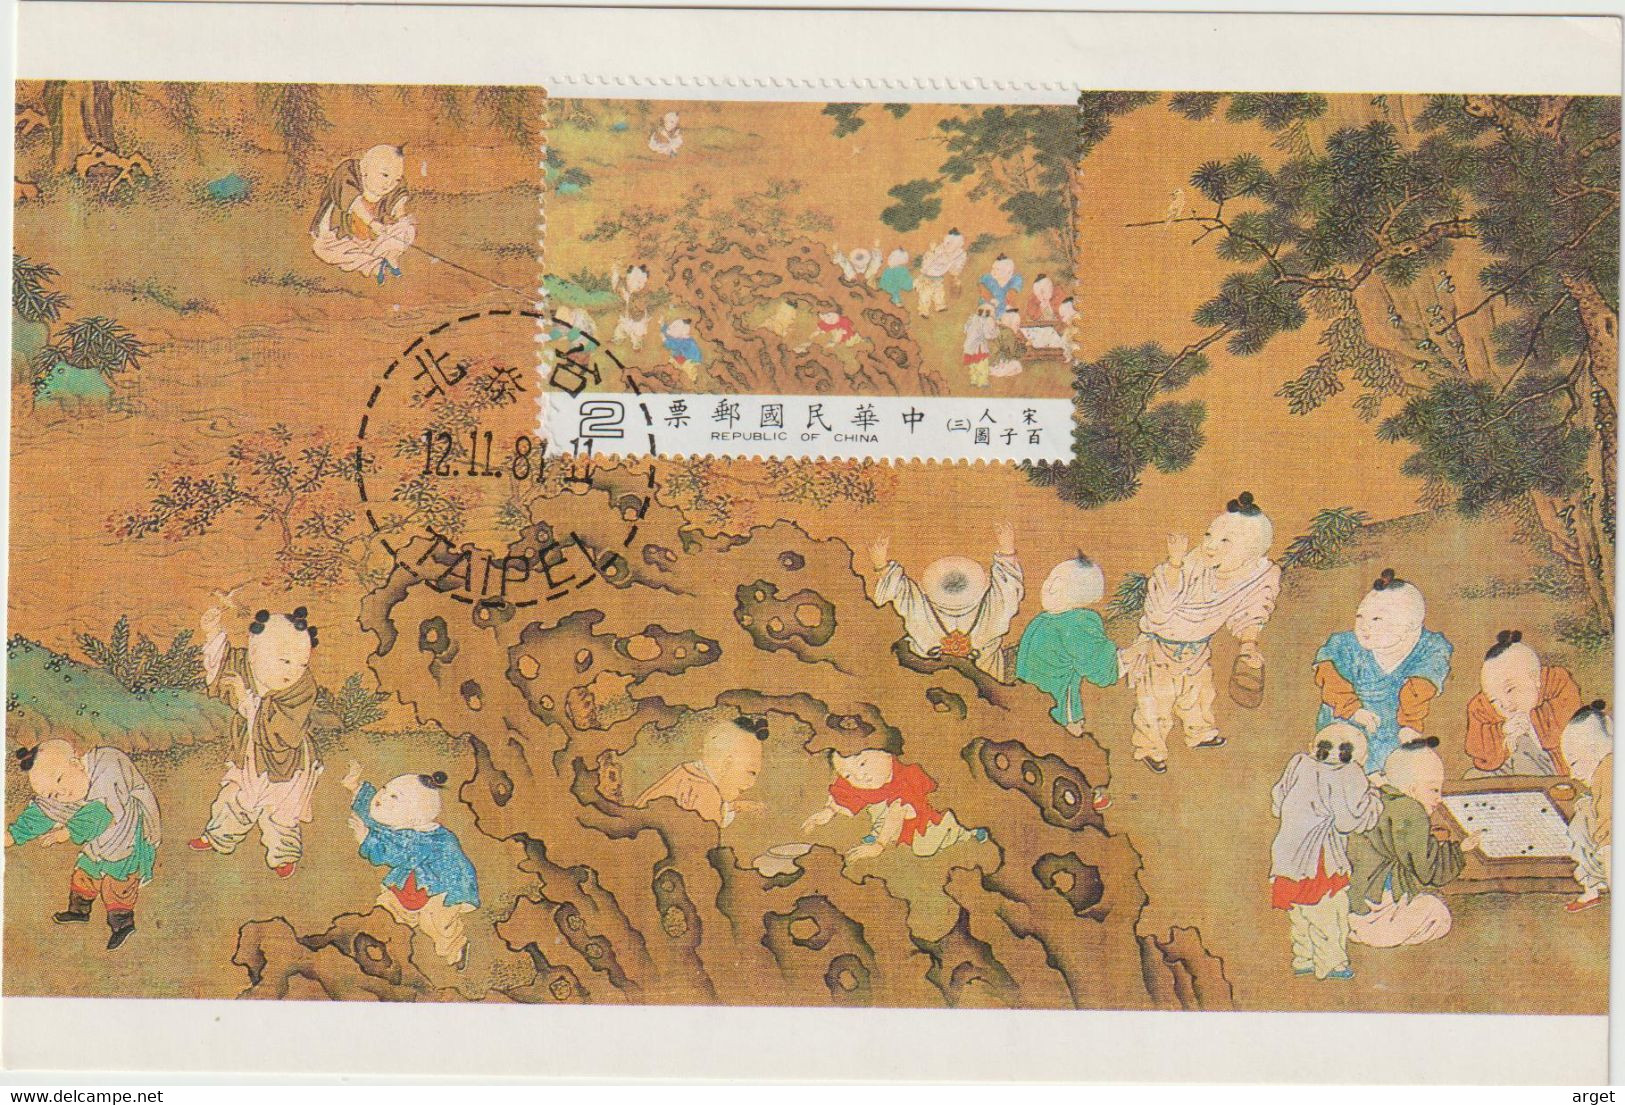 Carte Maximum TAIWAN N°Yvert 1385 (Musée Taipeh- Peinture Ancienne Chinoise) Obl Sp 1er Jour - Maximumkarten